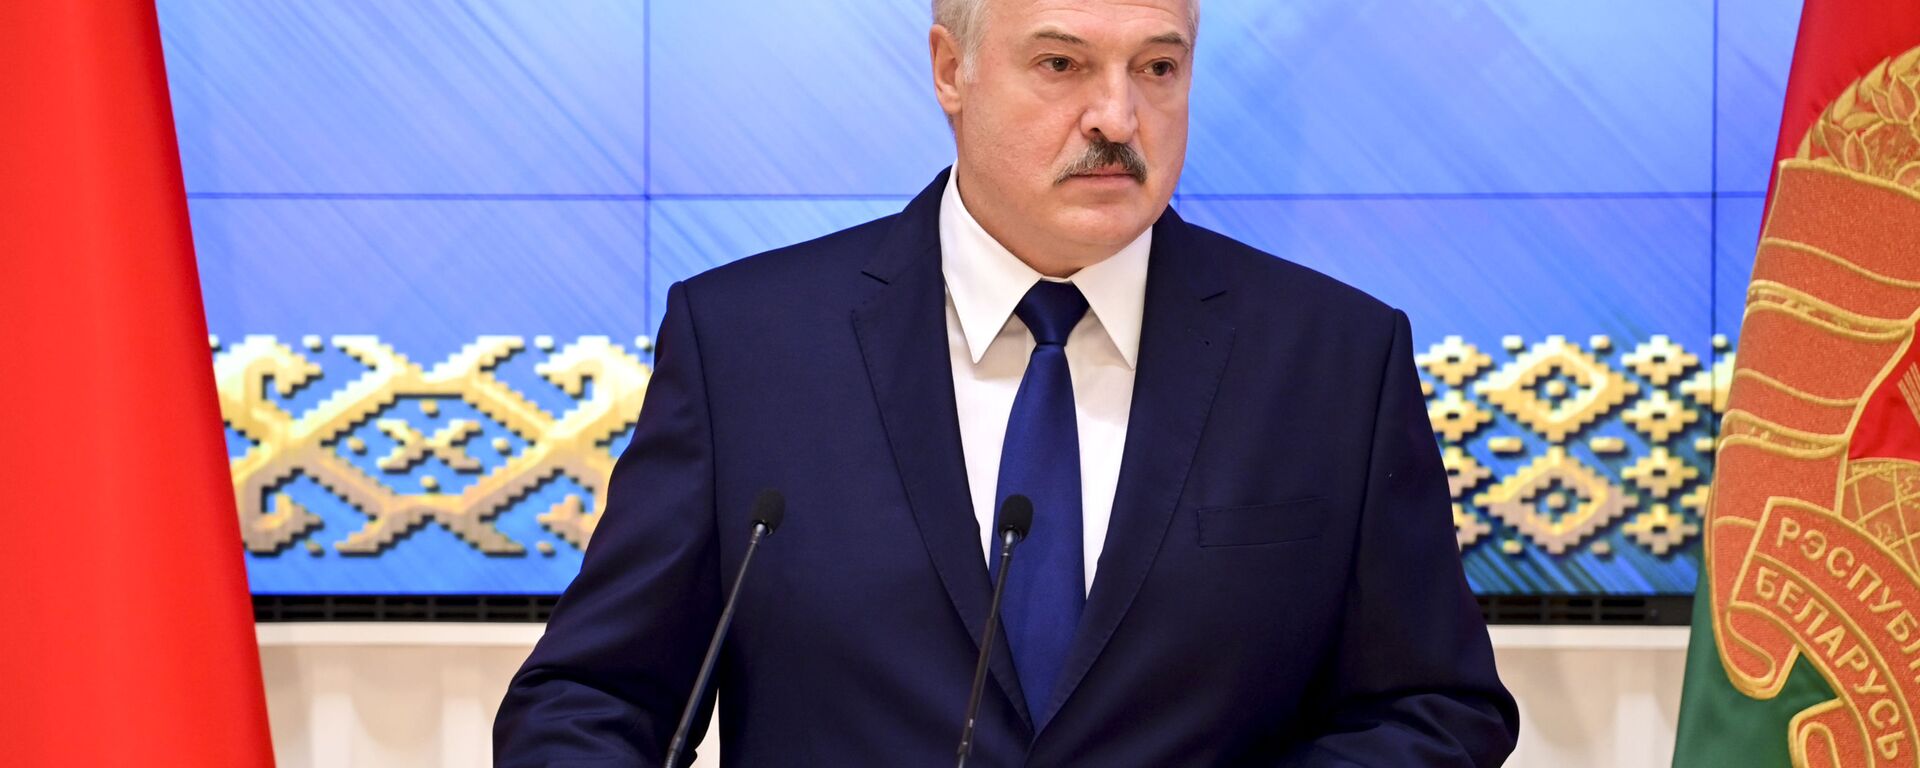 Президент Белоруссии Александр Лукашенко - Sputnik Молдова, 1920, 26.05.2021